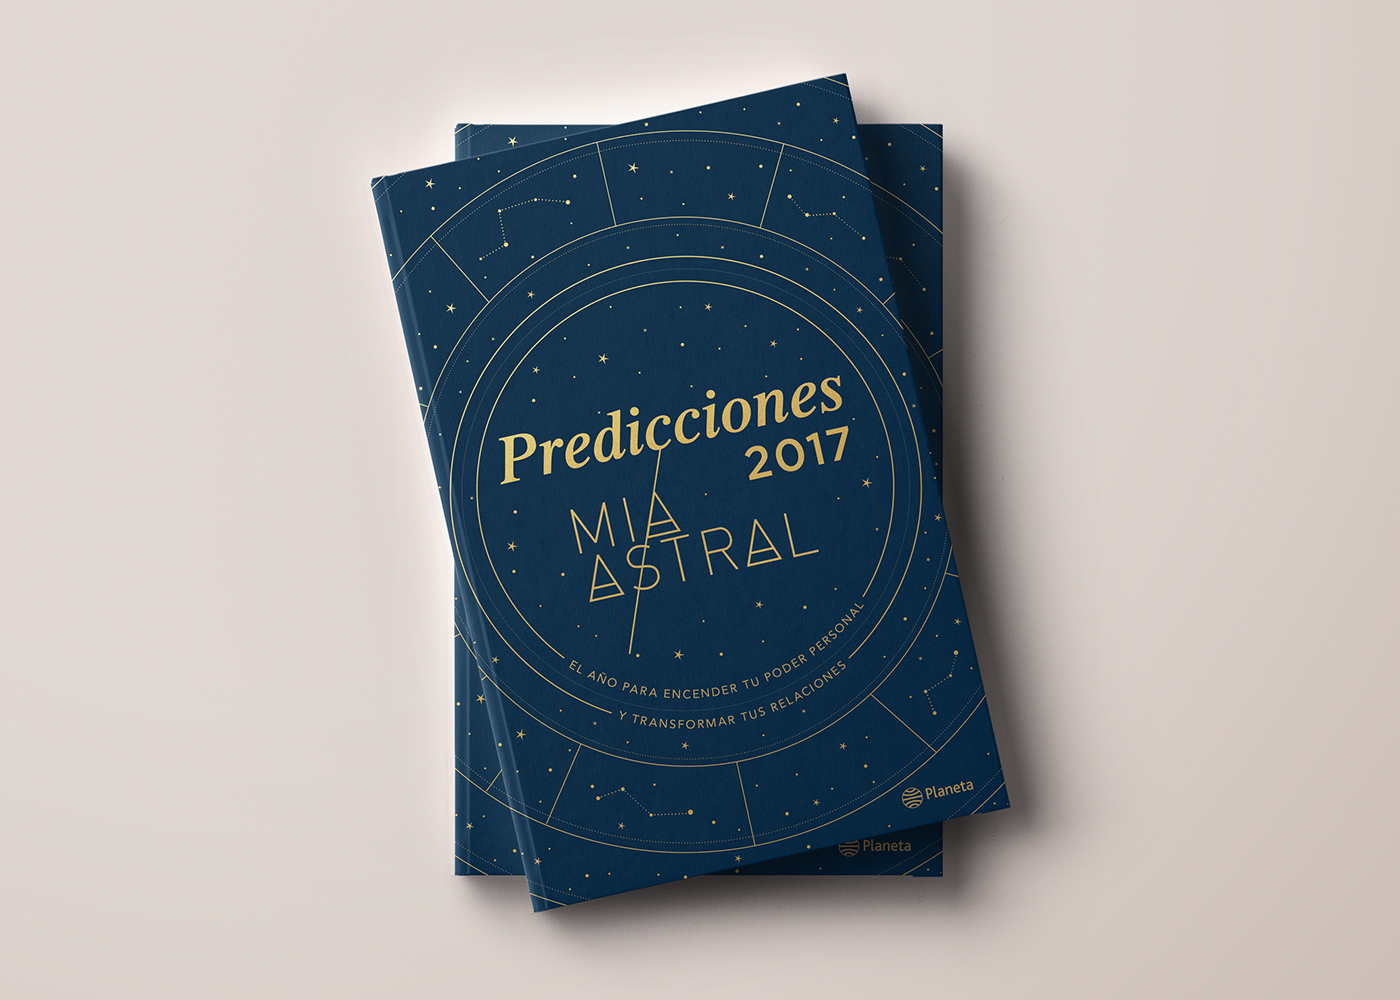 Mia Astral Libro de astrología astral Predicciones 2017 Astrology zodiac book astrologia Horoscopo signs